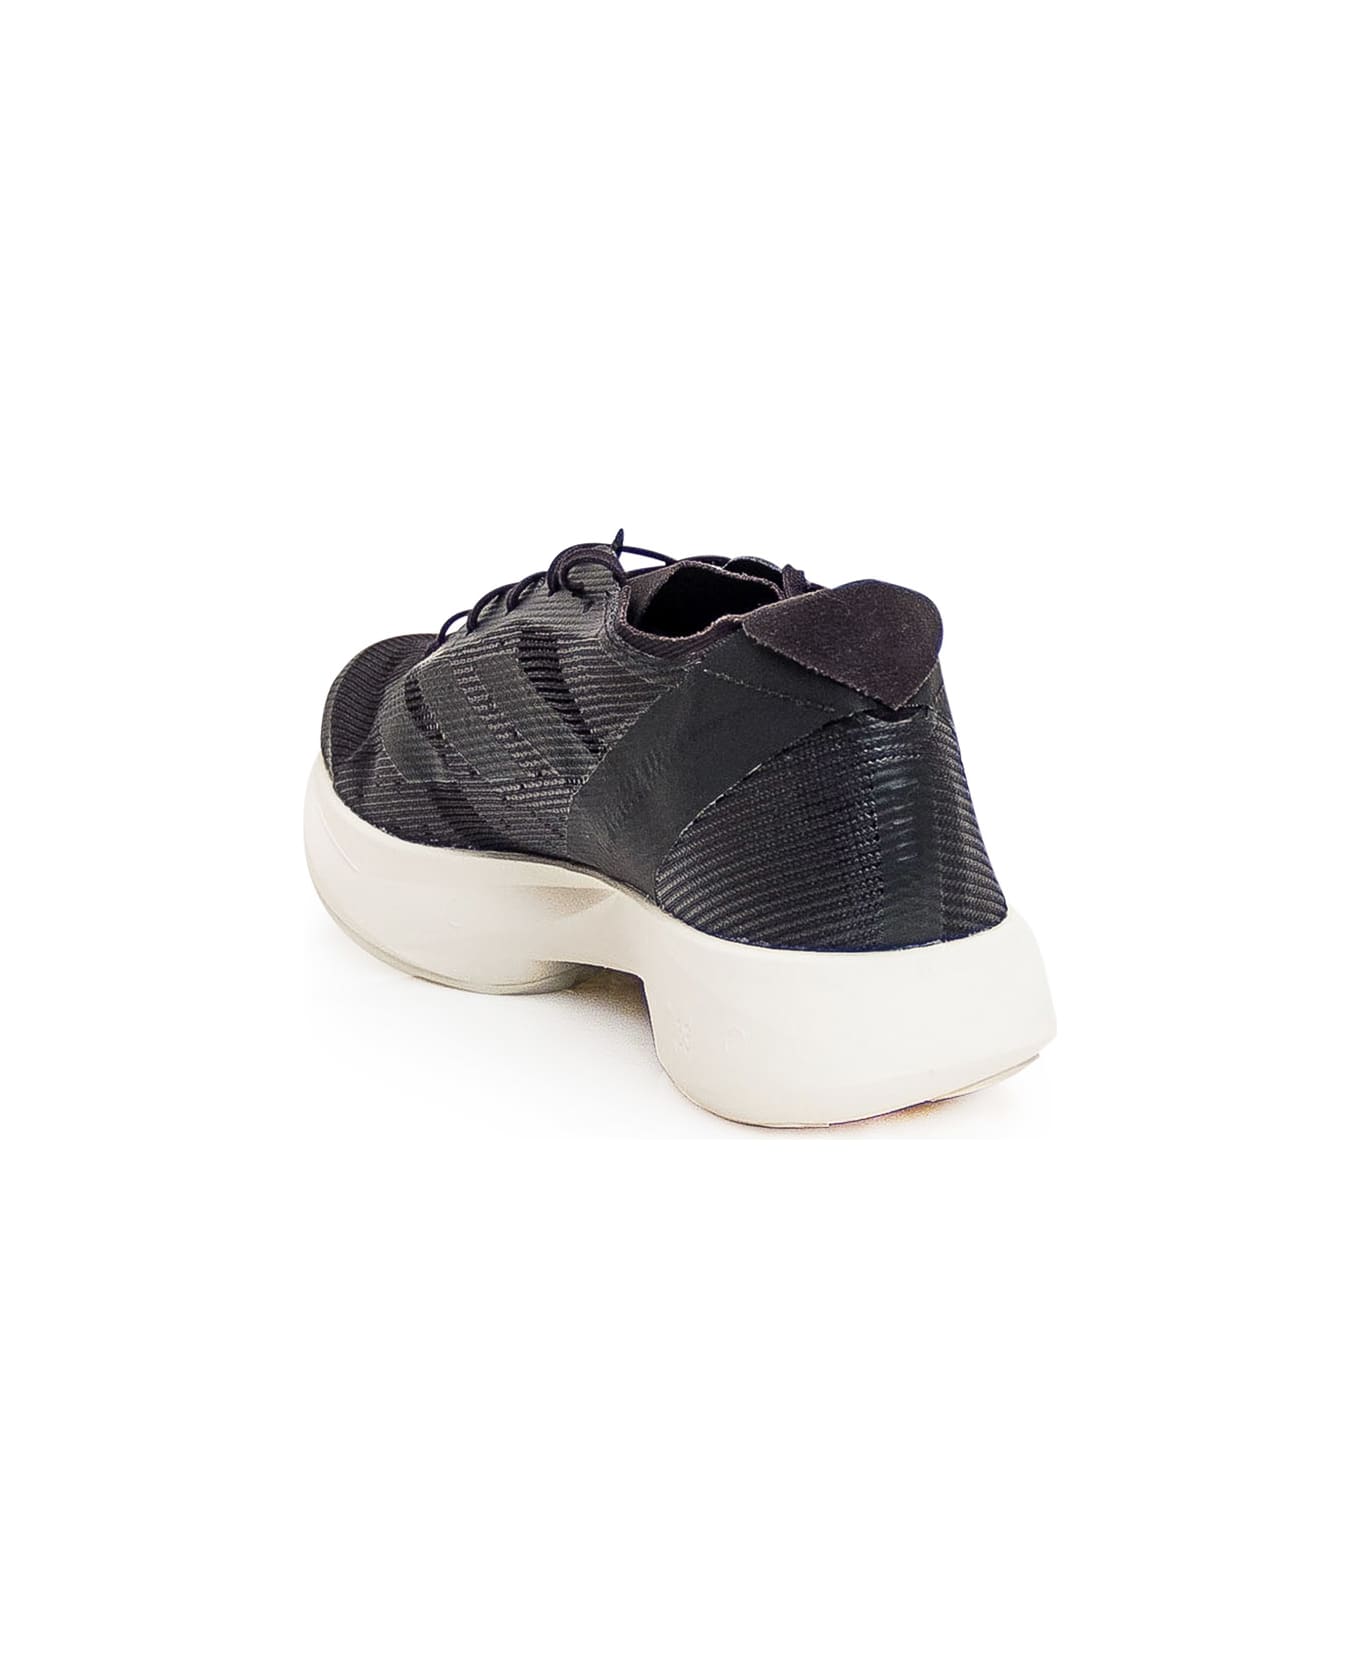 Y-3 Takumi Sen Sneaker - BLACK/BLACK/OWHITE